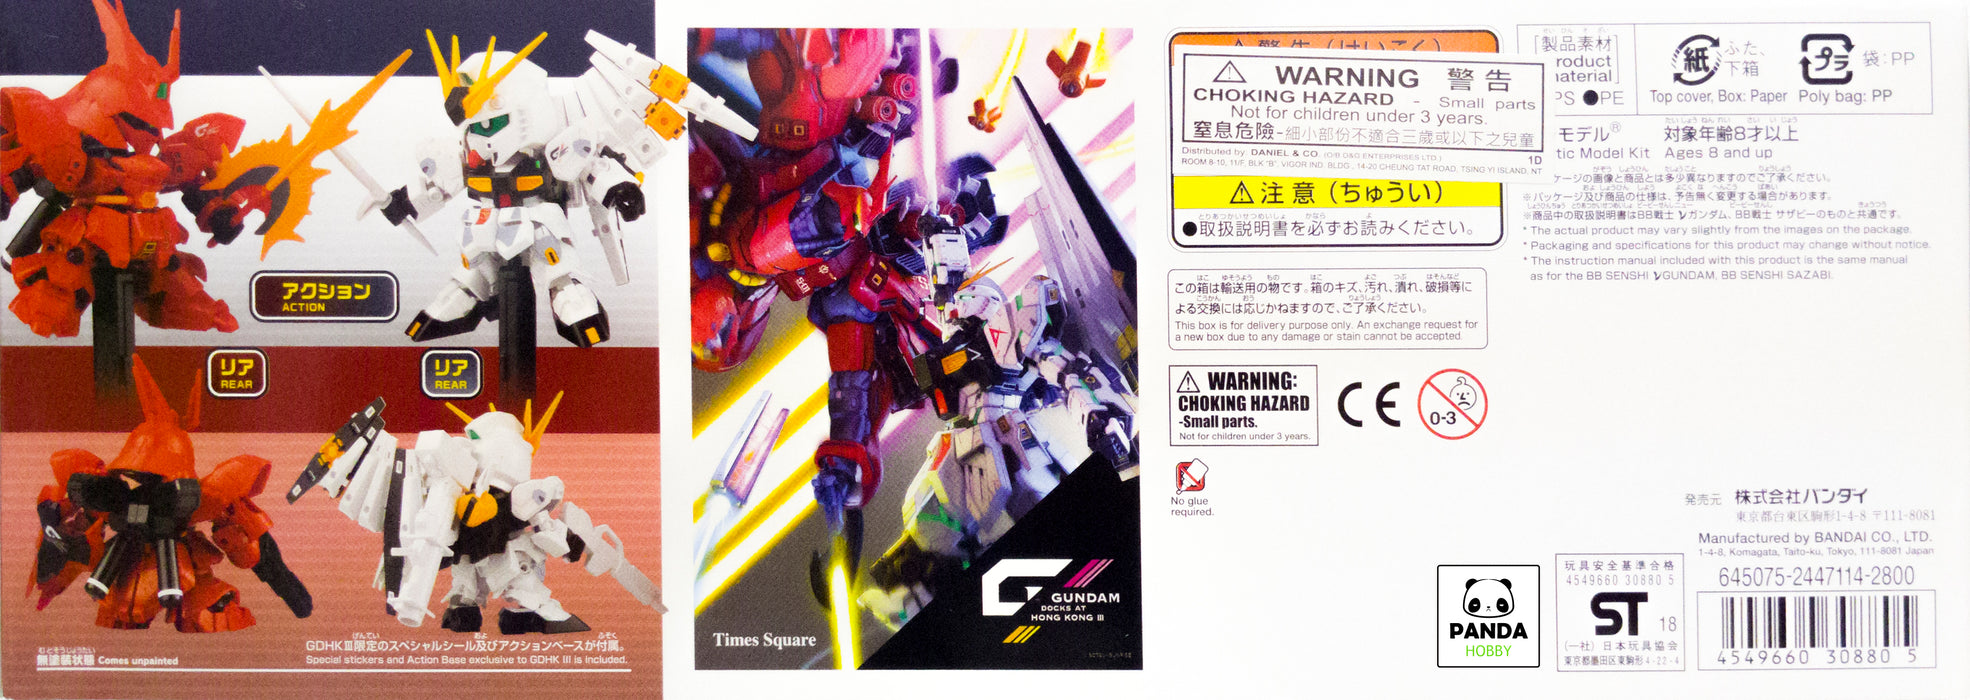 BB Senshi Nu Gundam VS Sazabi Gundam Docks at Hong Kong III Limited